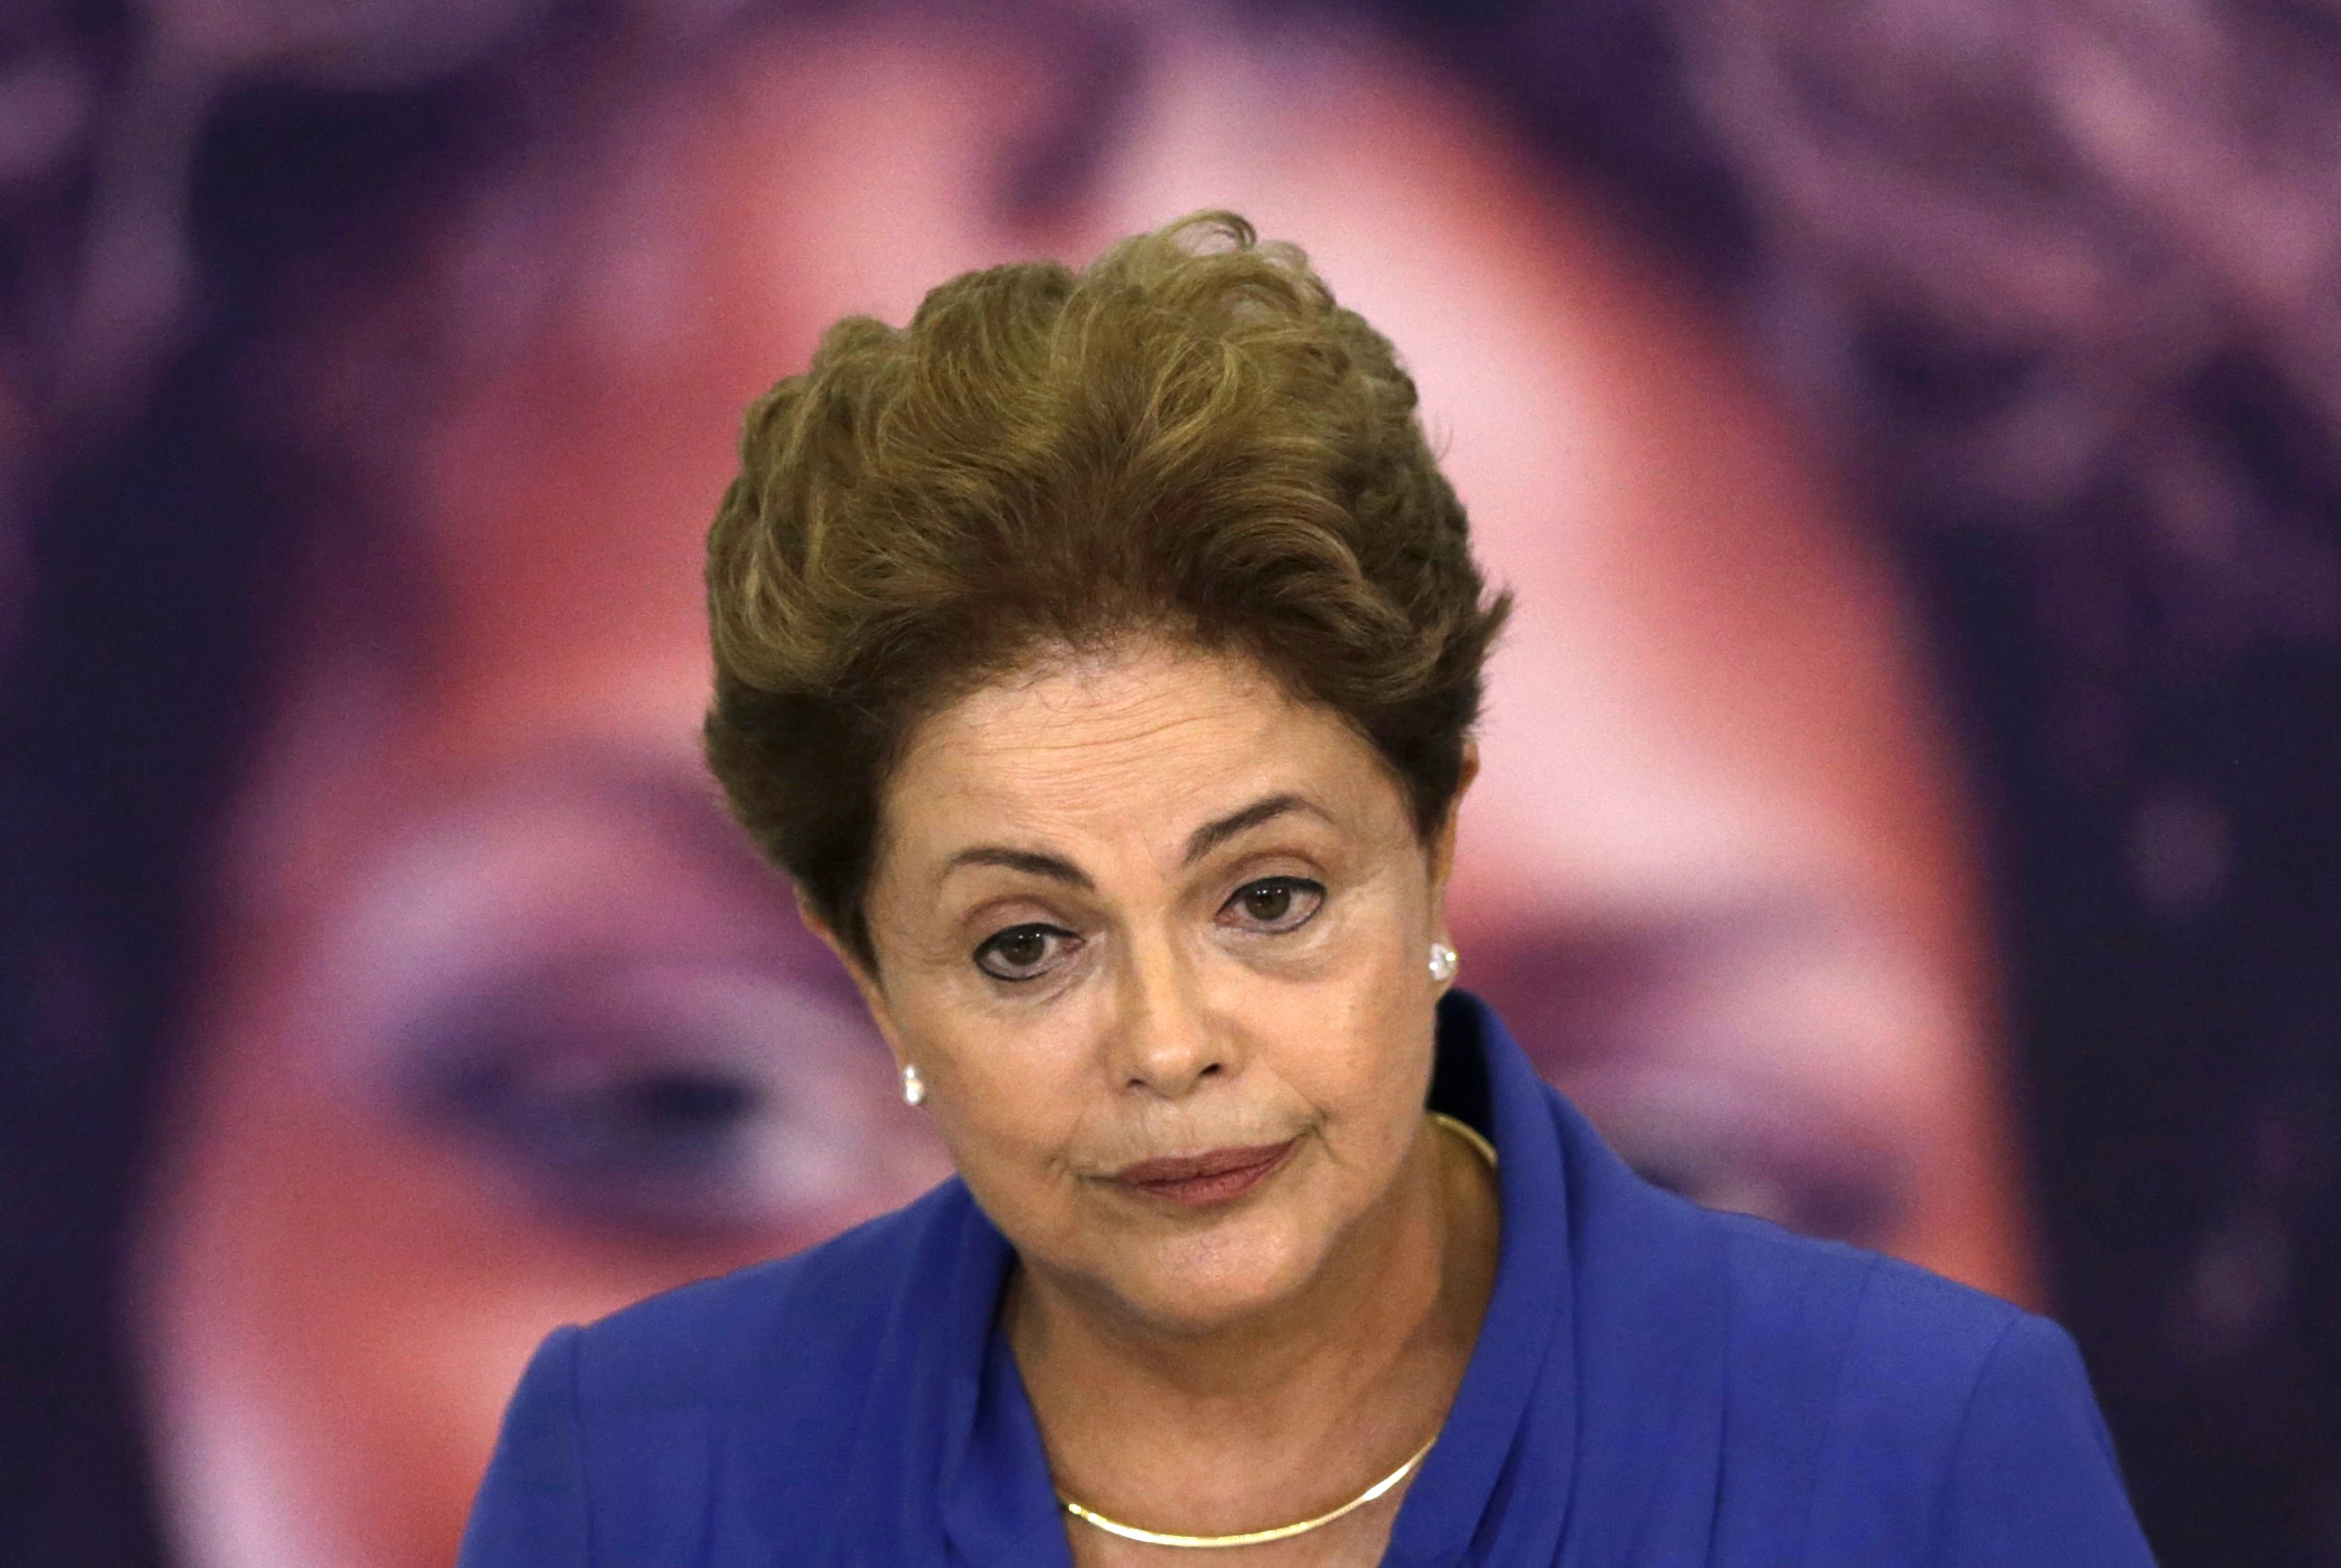 Presidenta Rousseff fue abucheada al llegar a feria de construcción en Sao Paulo